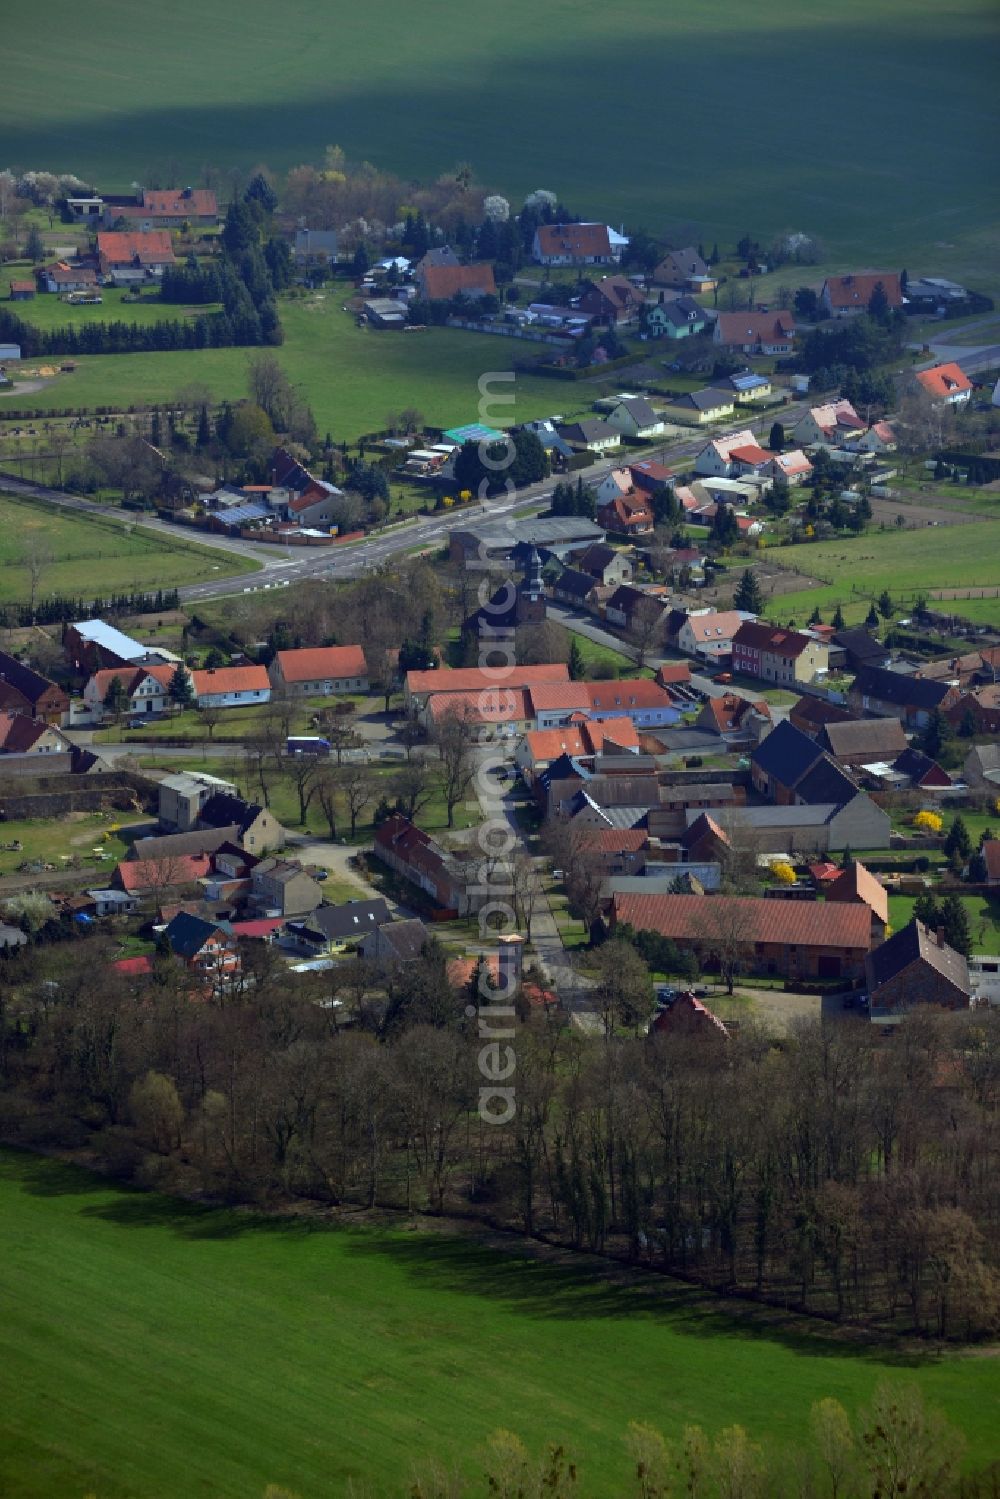 Aerial photograph Stegelitz - The City center and downtown Stegelitz in Saxony-Anhalt